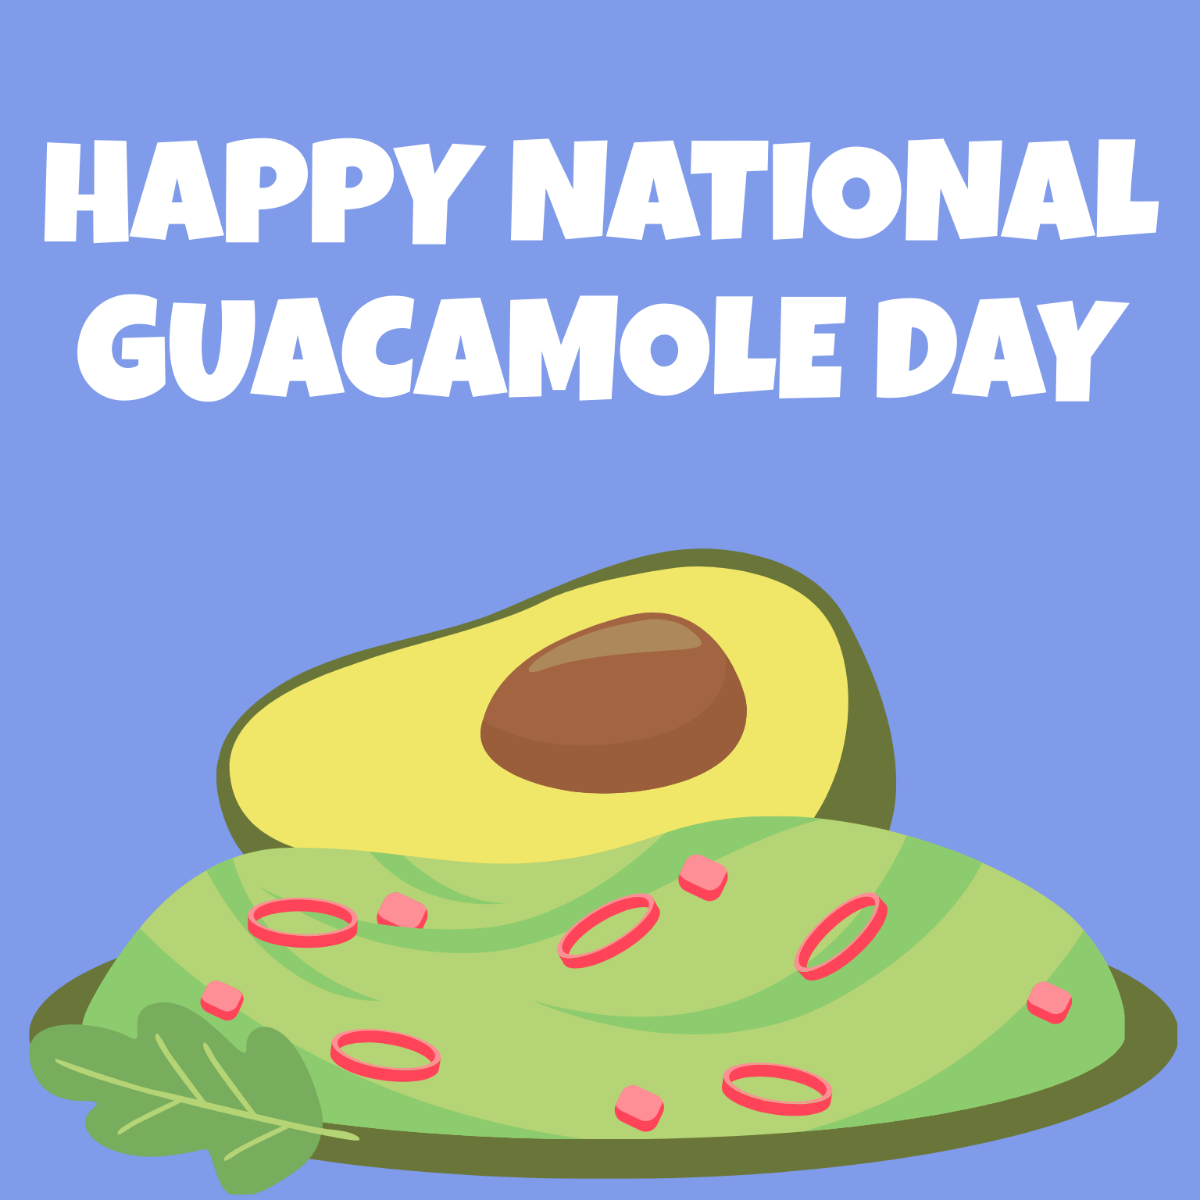 Happy National Guacamole Day Illustration